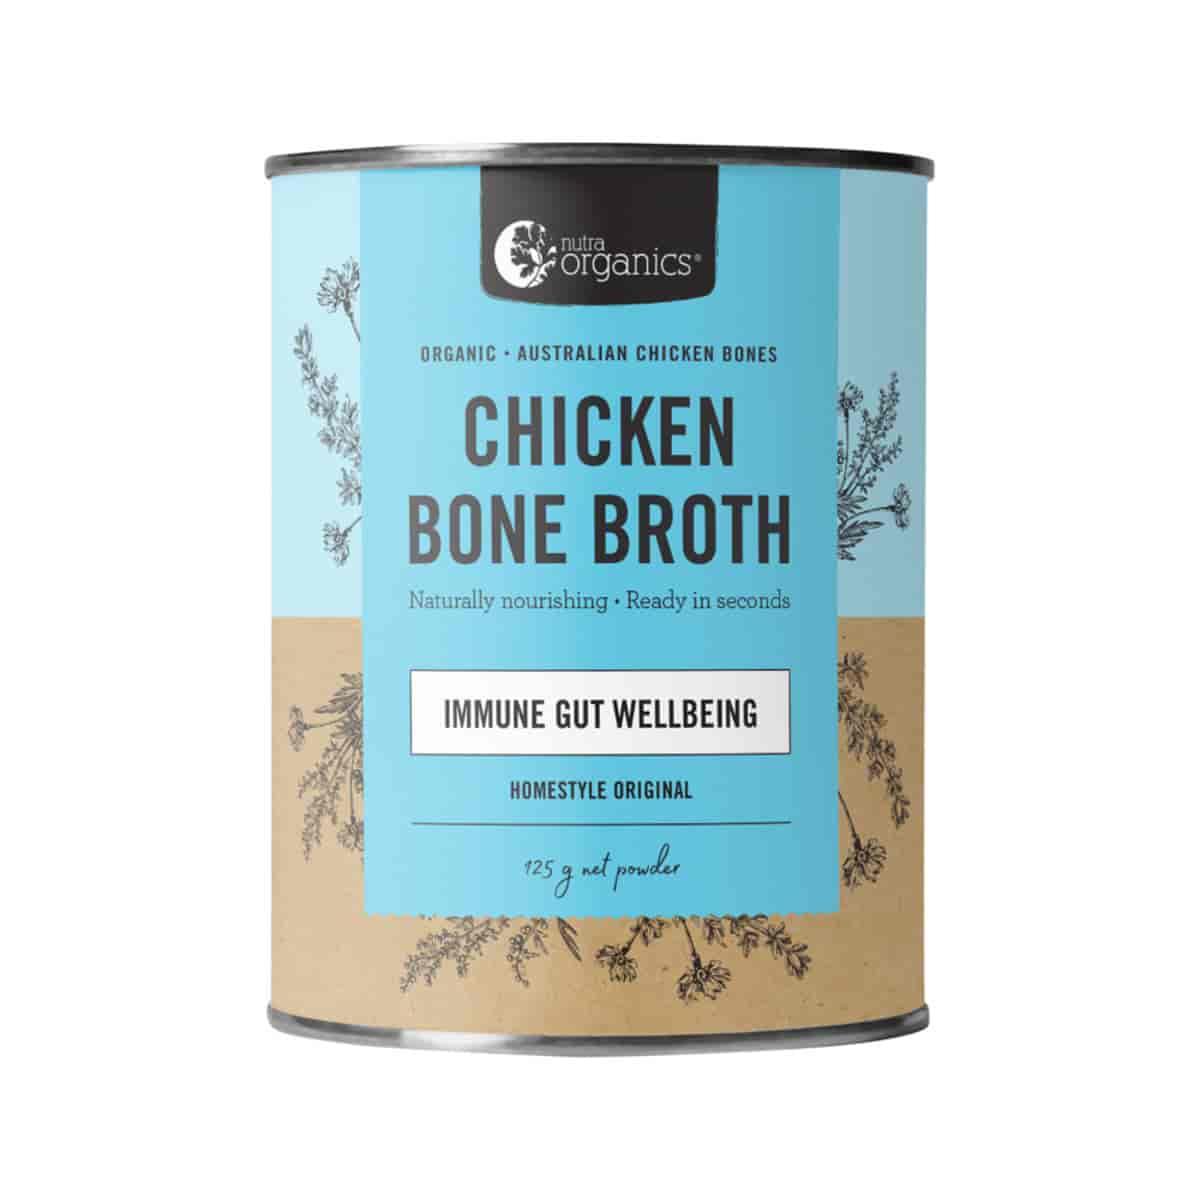 Nutra Organics Bone Broth Chicken Organic Homestyle Original 125g - QVM Vitamins™